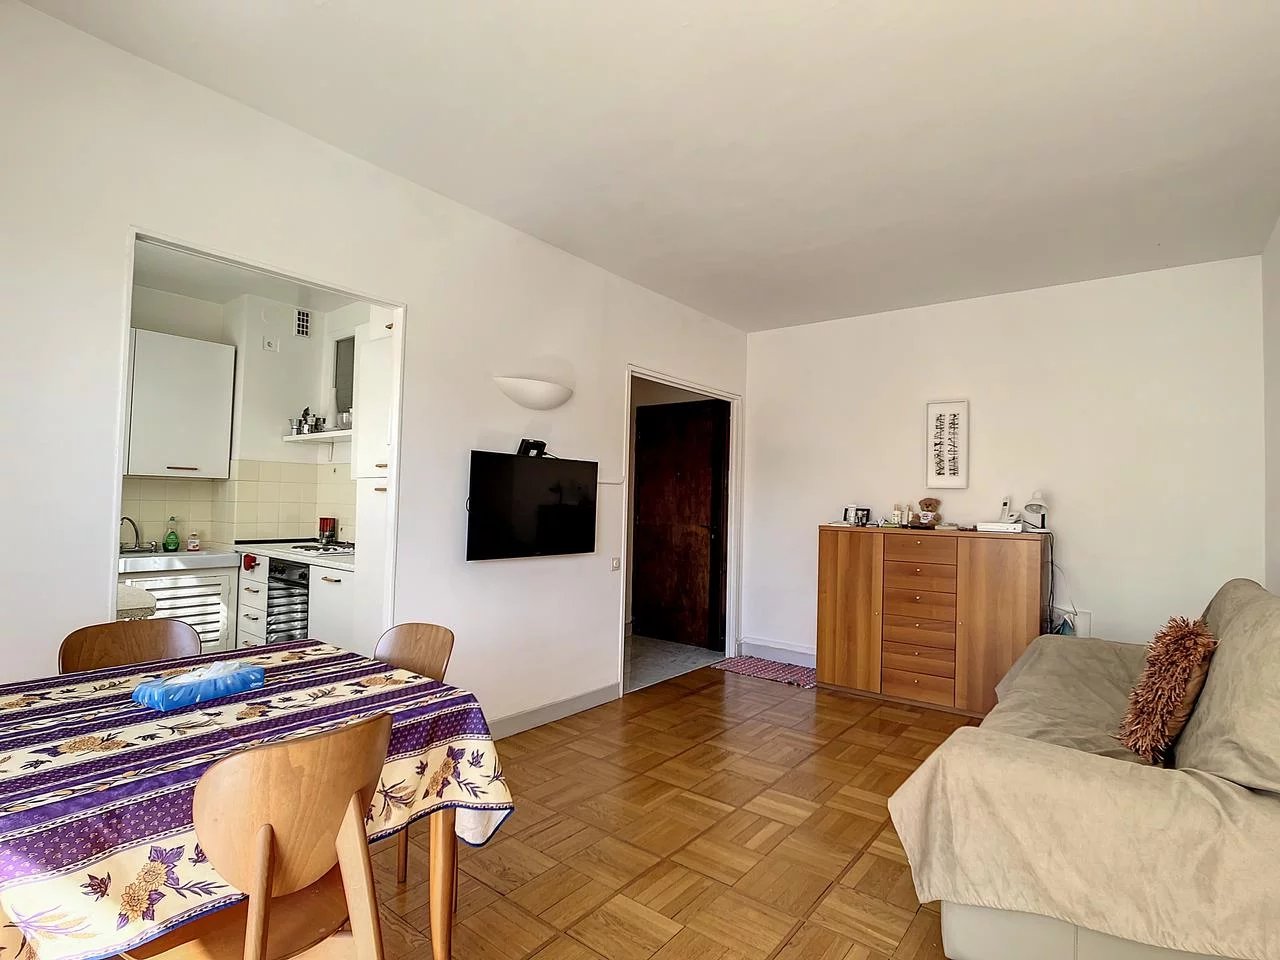 Appartement  1 Locali 28.92m2  In vendita   225 000 €